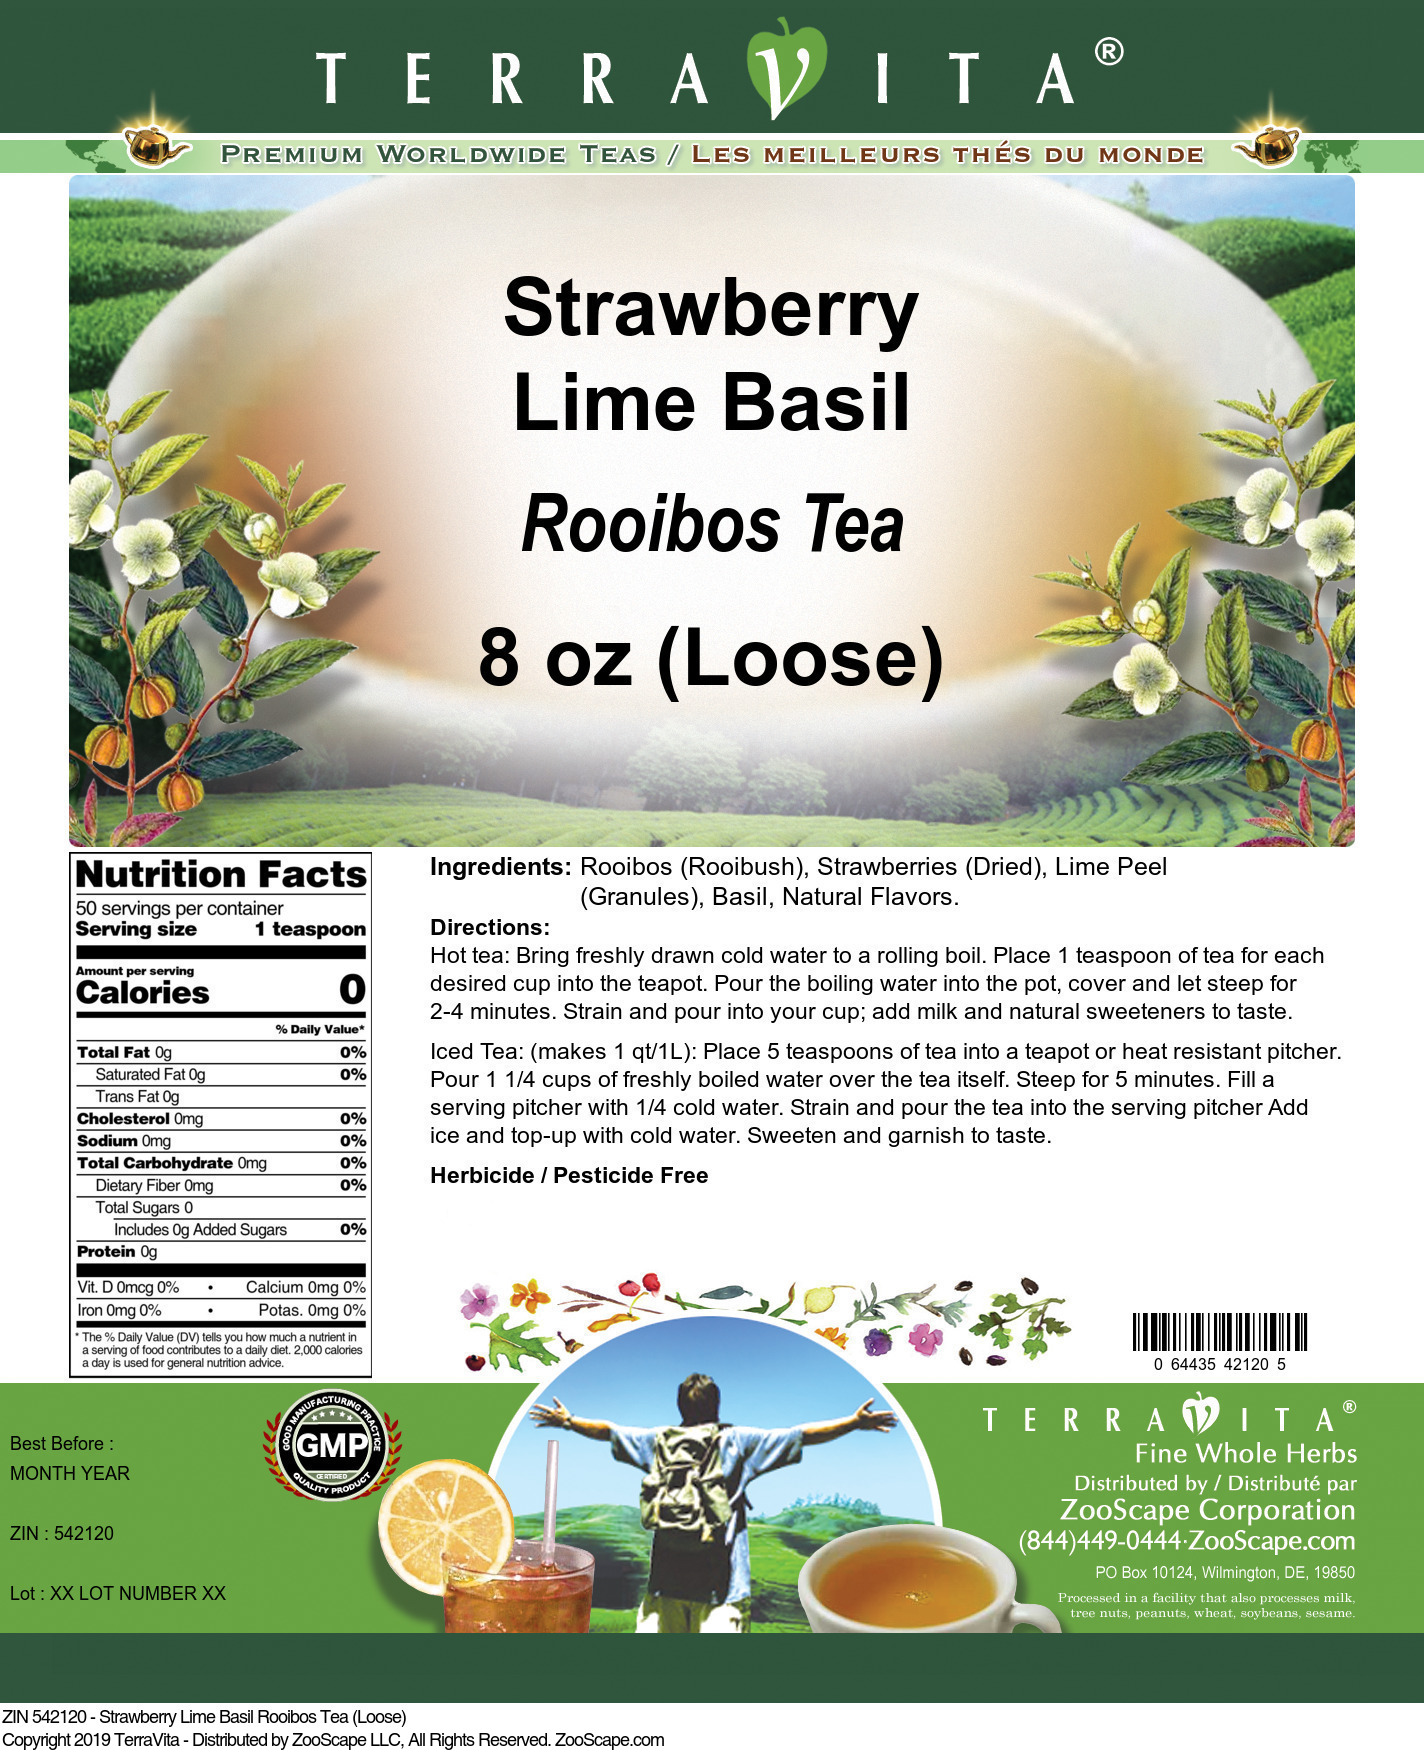 Strawberry Lime Basil Rooibos Tea (Loose) - Label